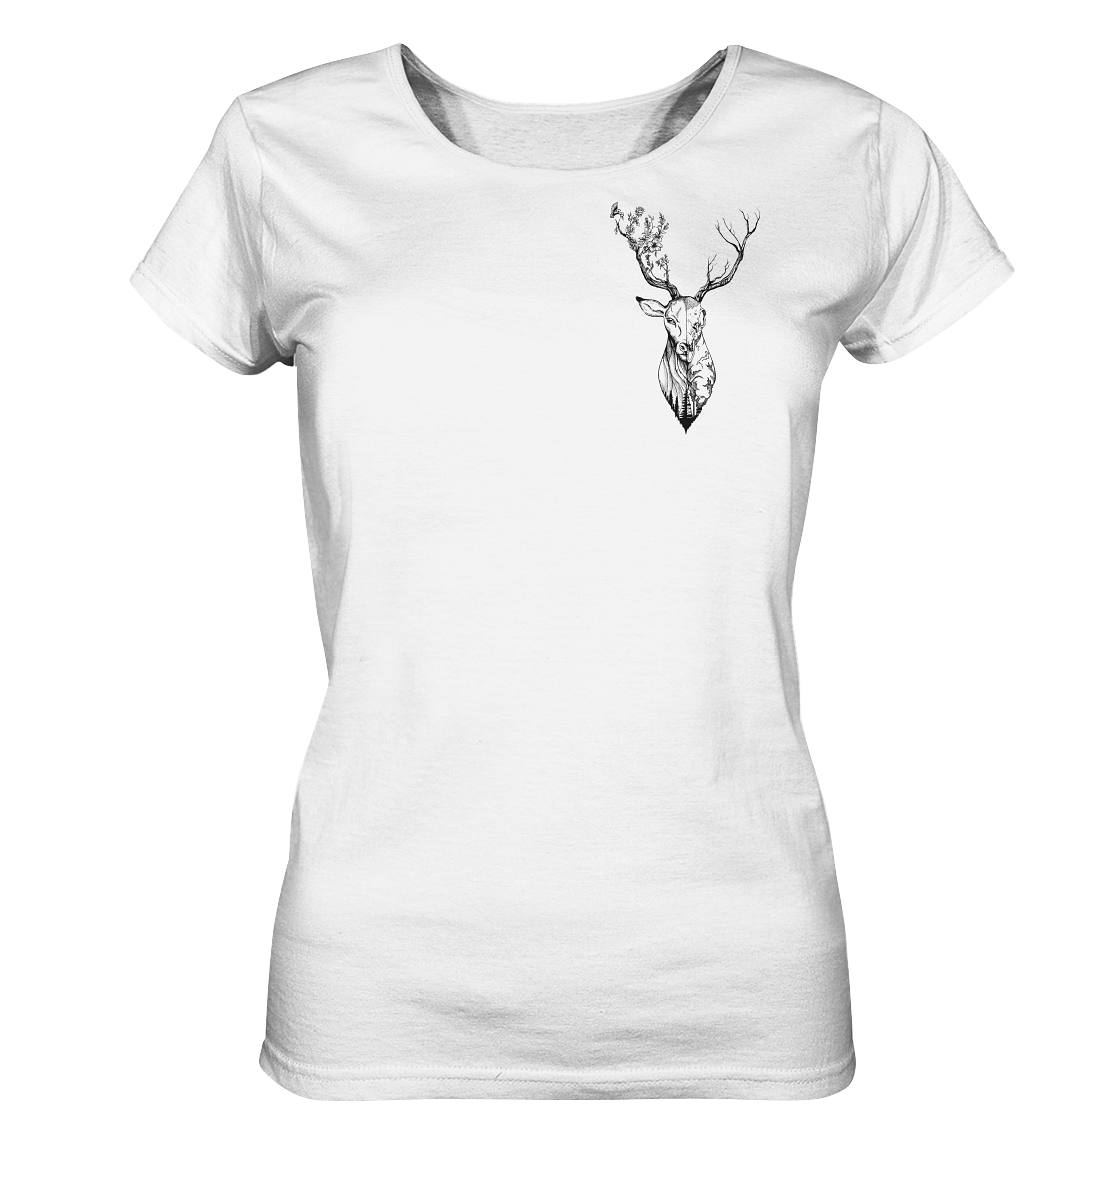 front-ladies-organic-shirt-f8f8f8-1116x-7.png